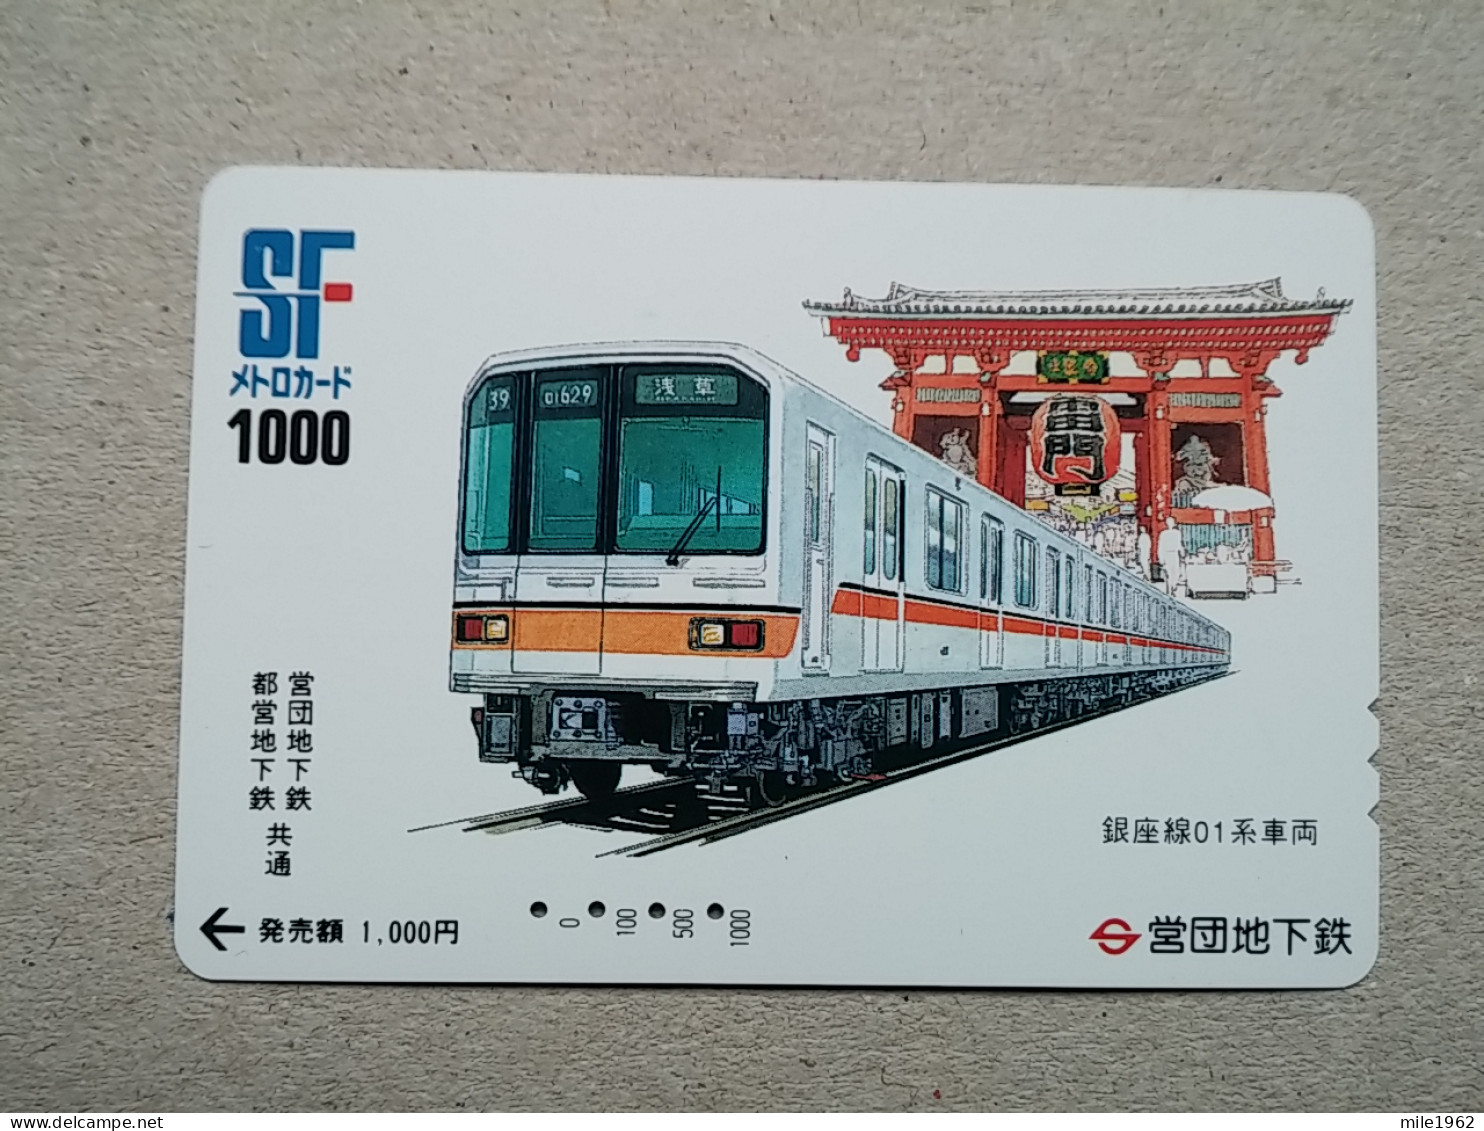 T-615 - JAPAN, Japon, Nipon, Carte Prepayee, Prepaid Card, CARD, RAILWAY, TRAIN, CHEMIN DE FER - Treinen